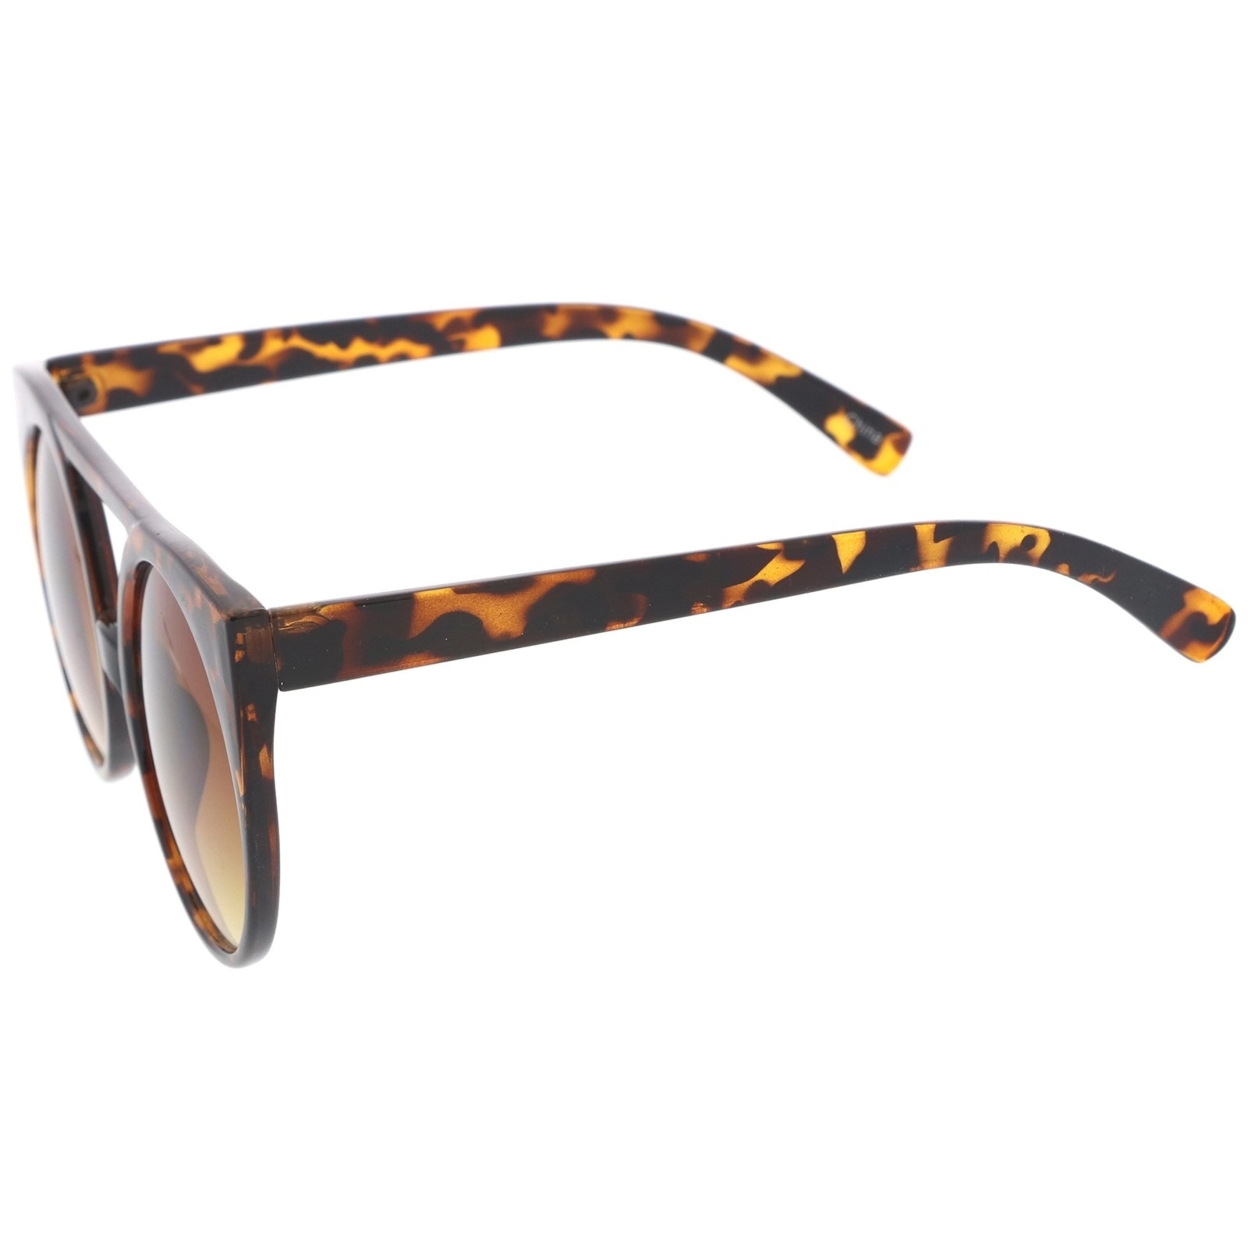 Women's Flat Top Cutout Round Lens Oversize Cat Eye Sunglasses 52mm - Black / Lavender